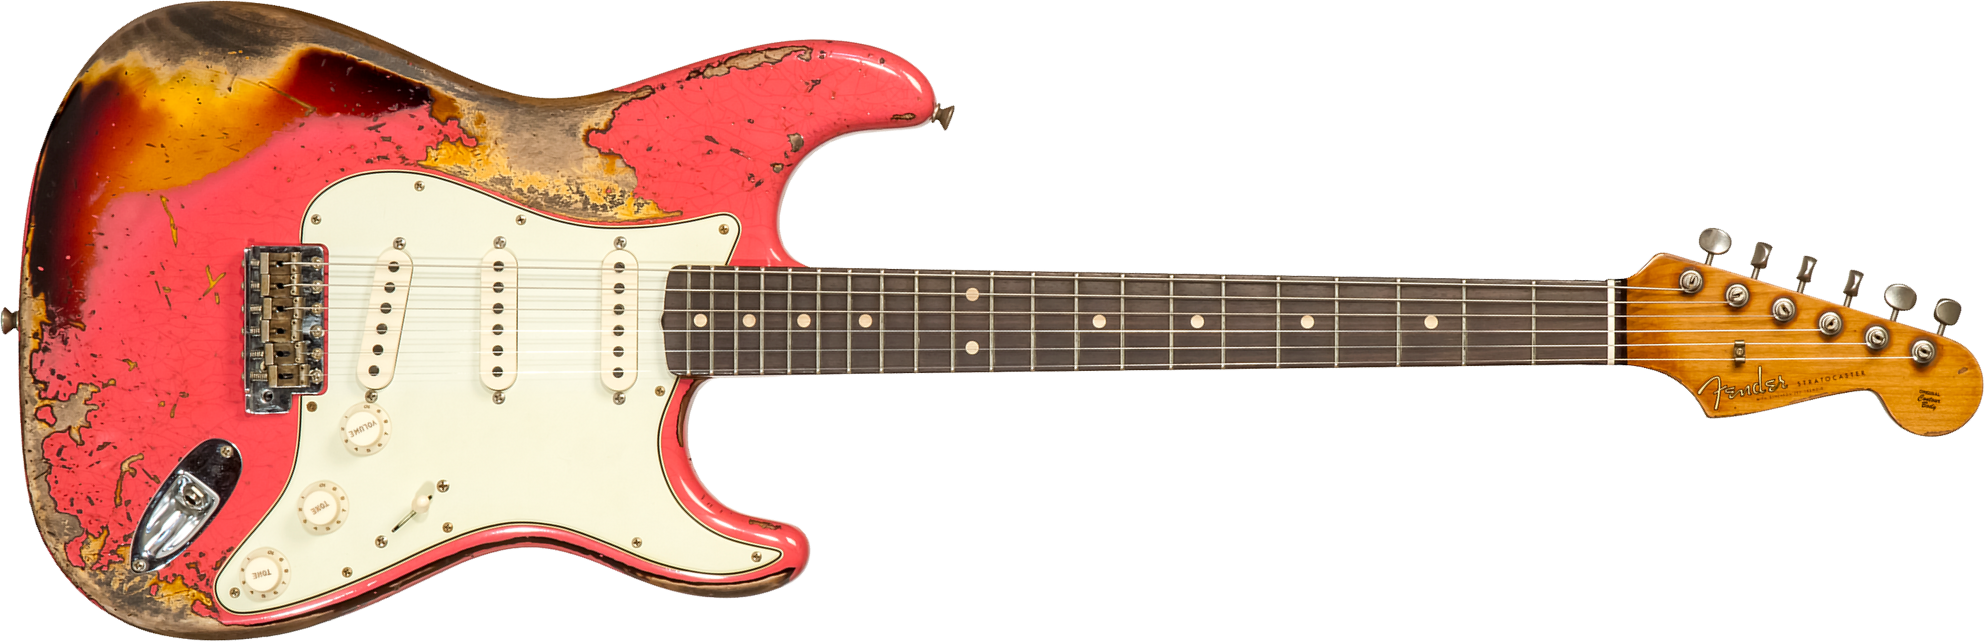 Fender Custom Shop Strat 1960/63 3s Trem Rw #cz566764 - Super Heavy Relic Fiesta Red Ov. 3-color Sunburst - Str shape electric guitar - Main picture